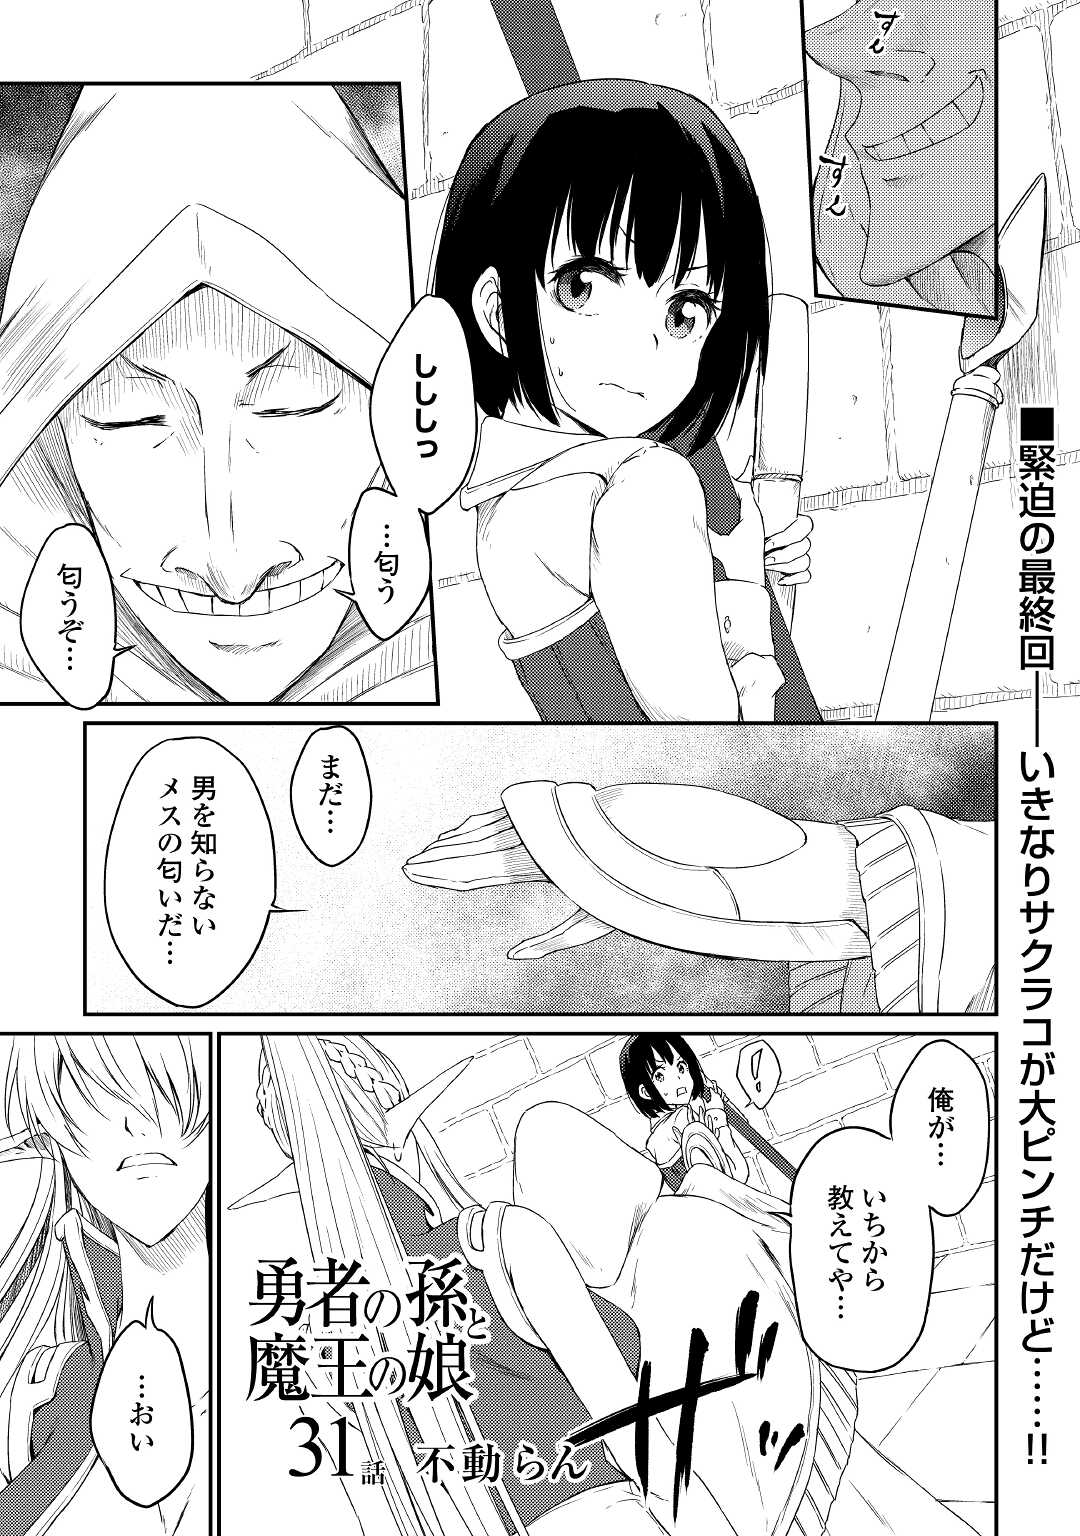 Yuusha no Mago to Maou no Musume - Chapter 31 - Page 1